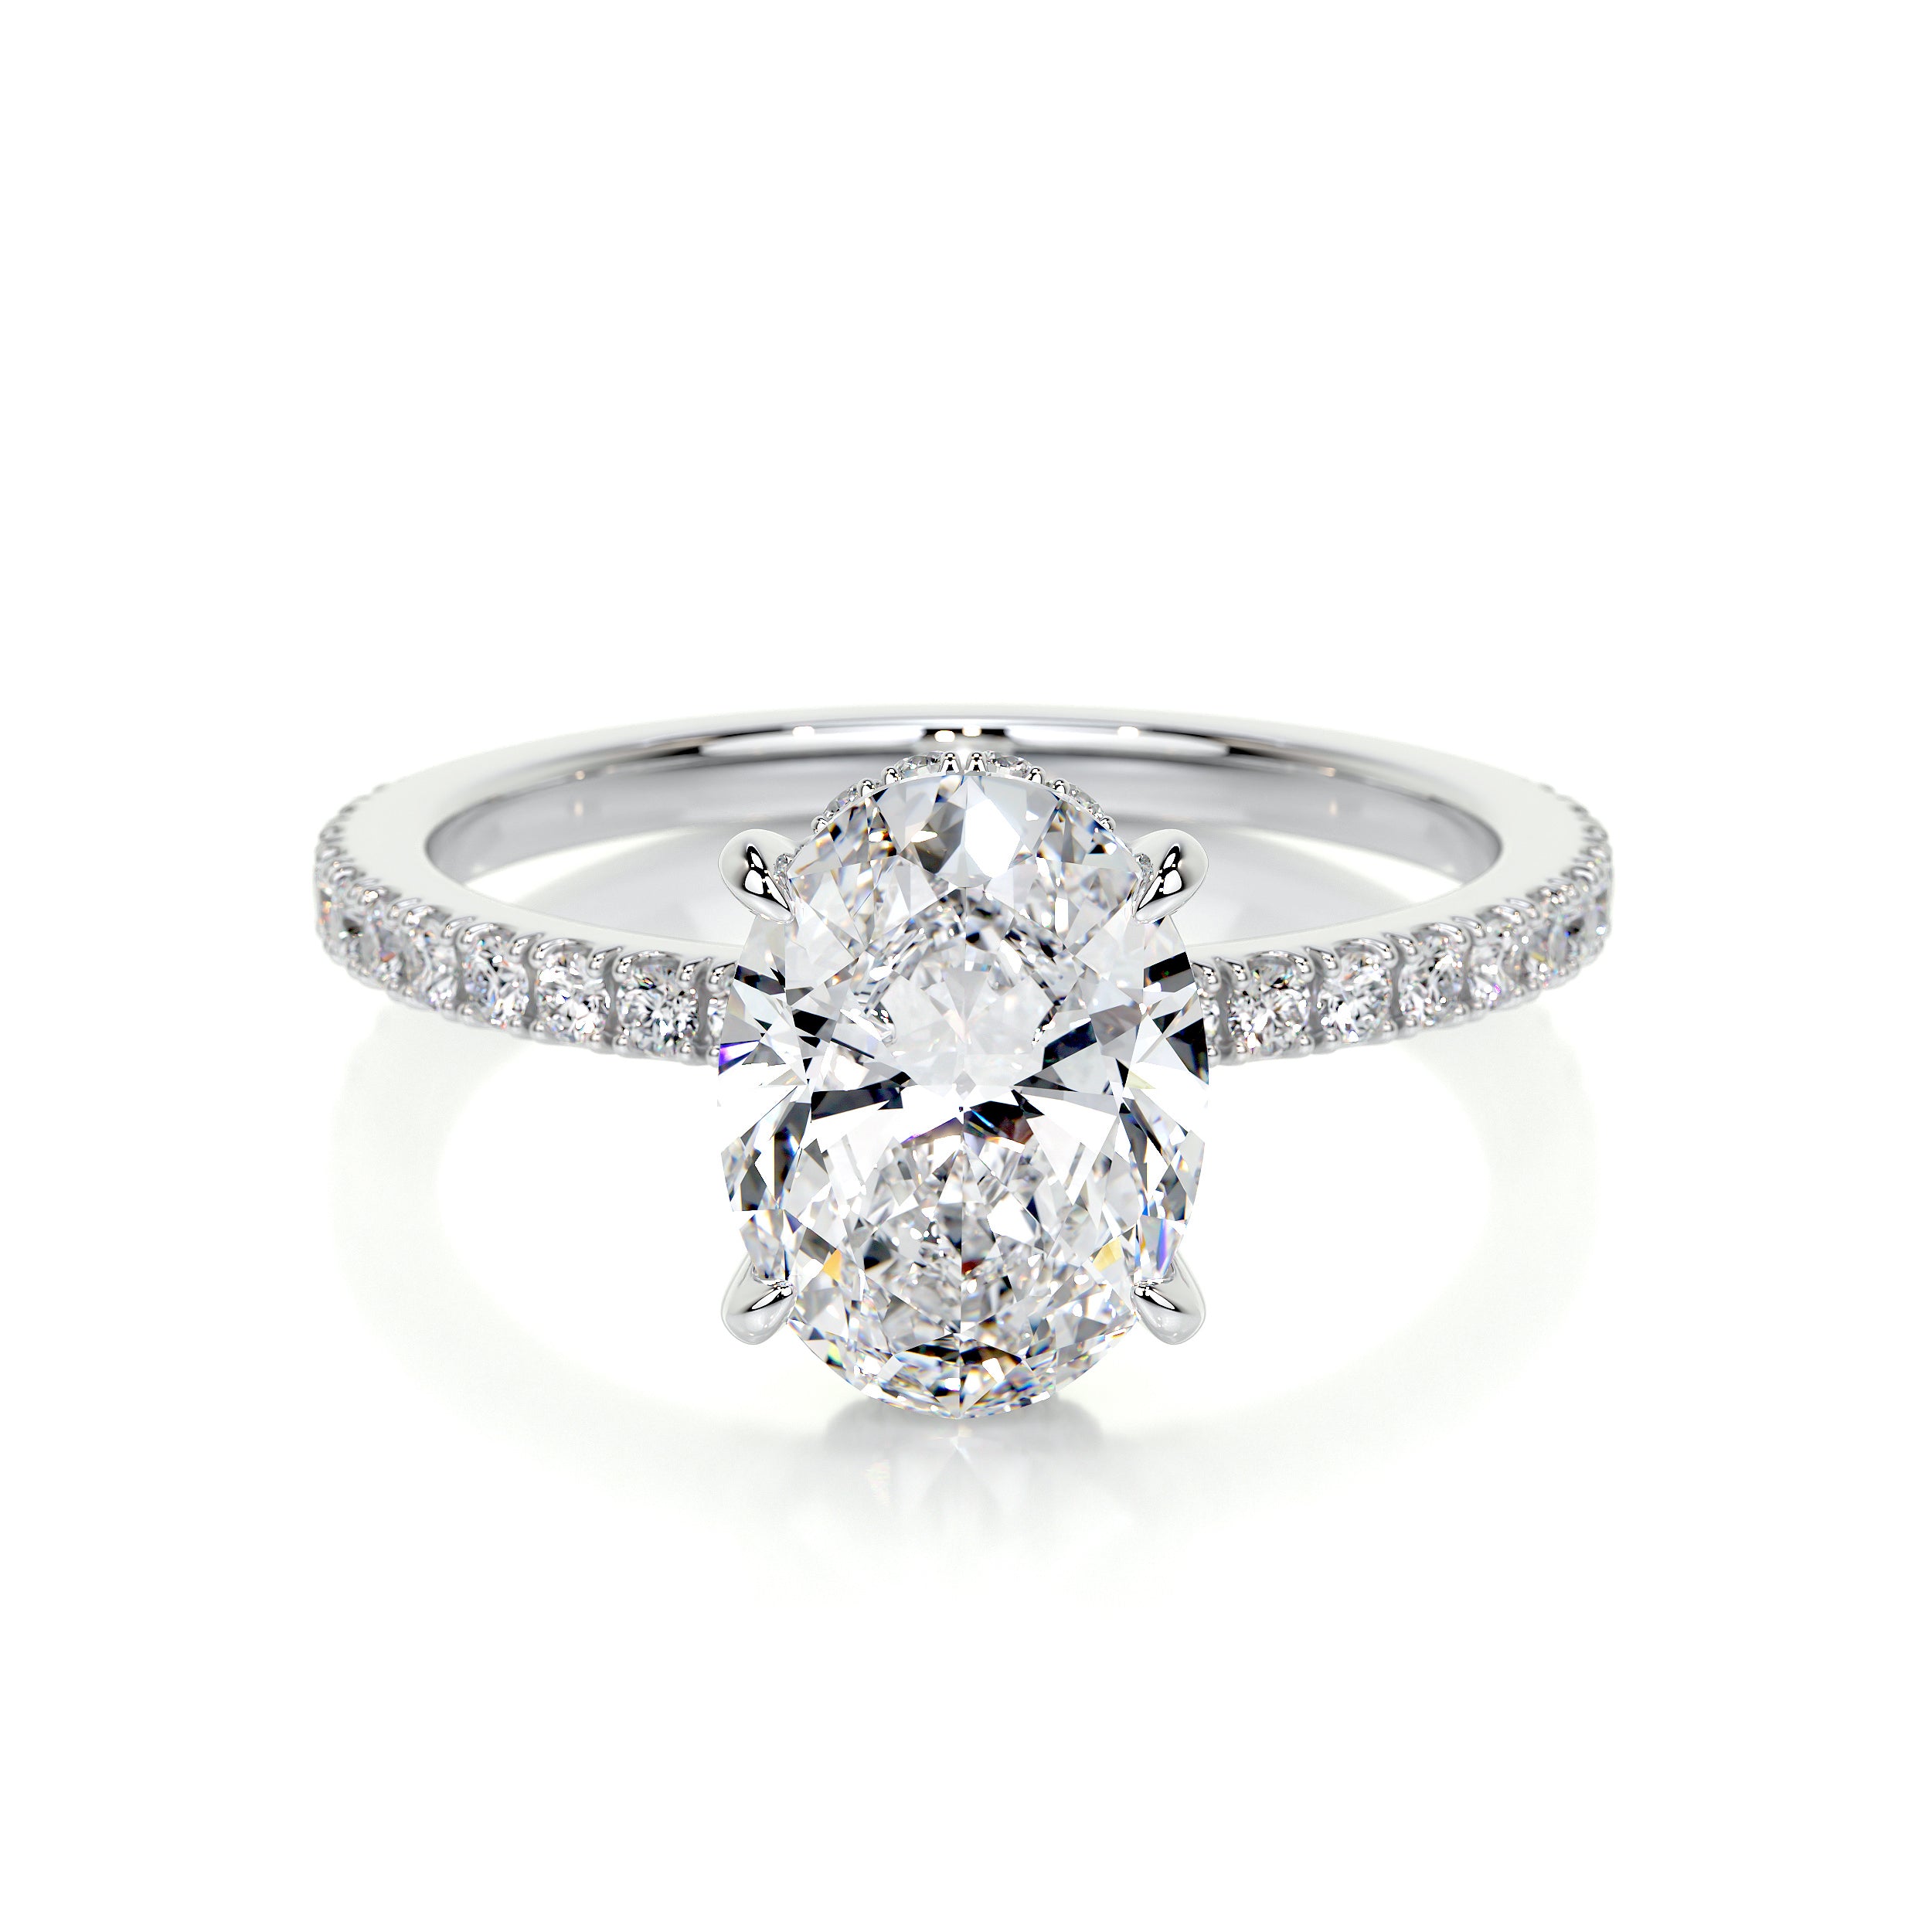 Natural Yellow Radiant Cut diamond with white radiant cut diamonds in a 3 Diamond  Ring .94 carats total weight - Elliott's Jewelers